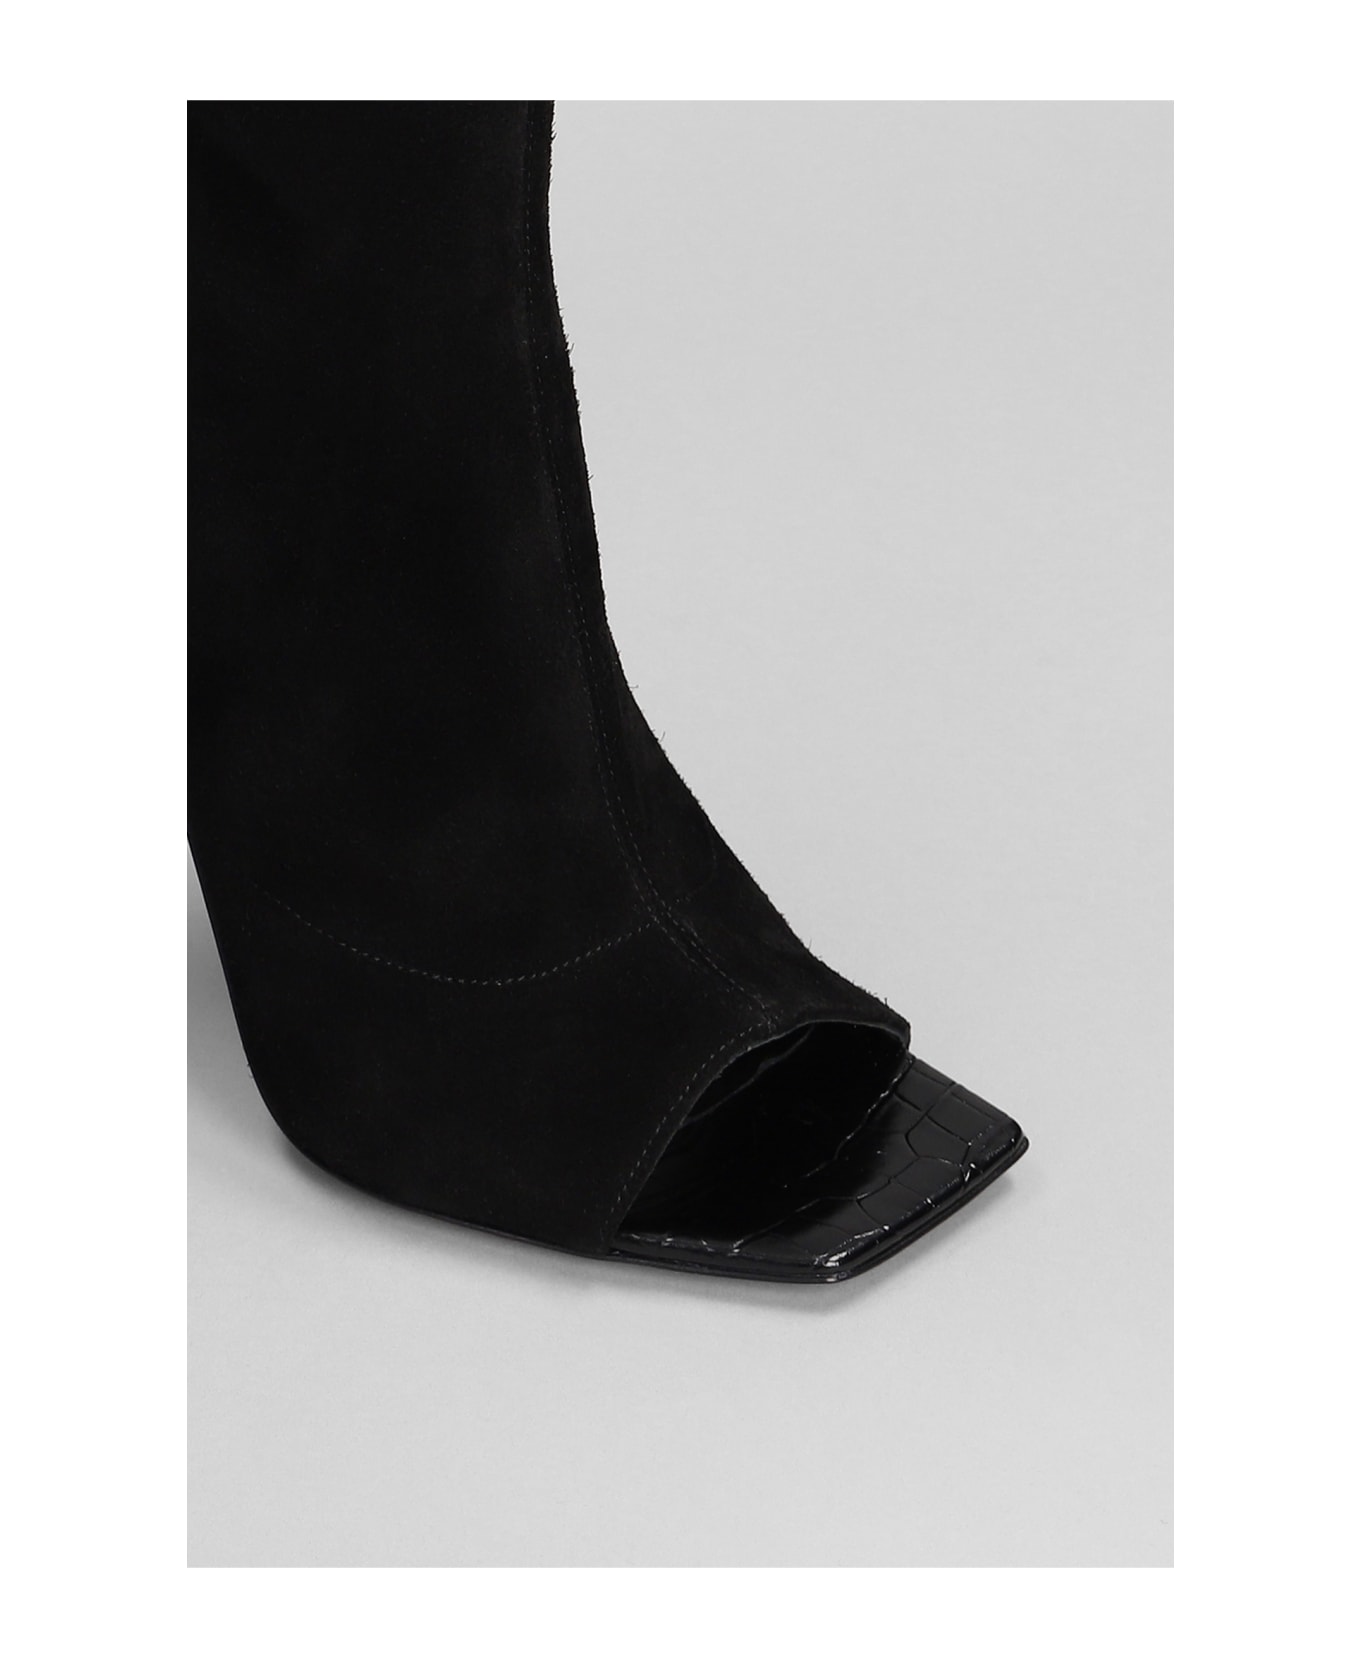 Paris Texas Amanda High Heels Ankle Boots In Black Suede - Black